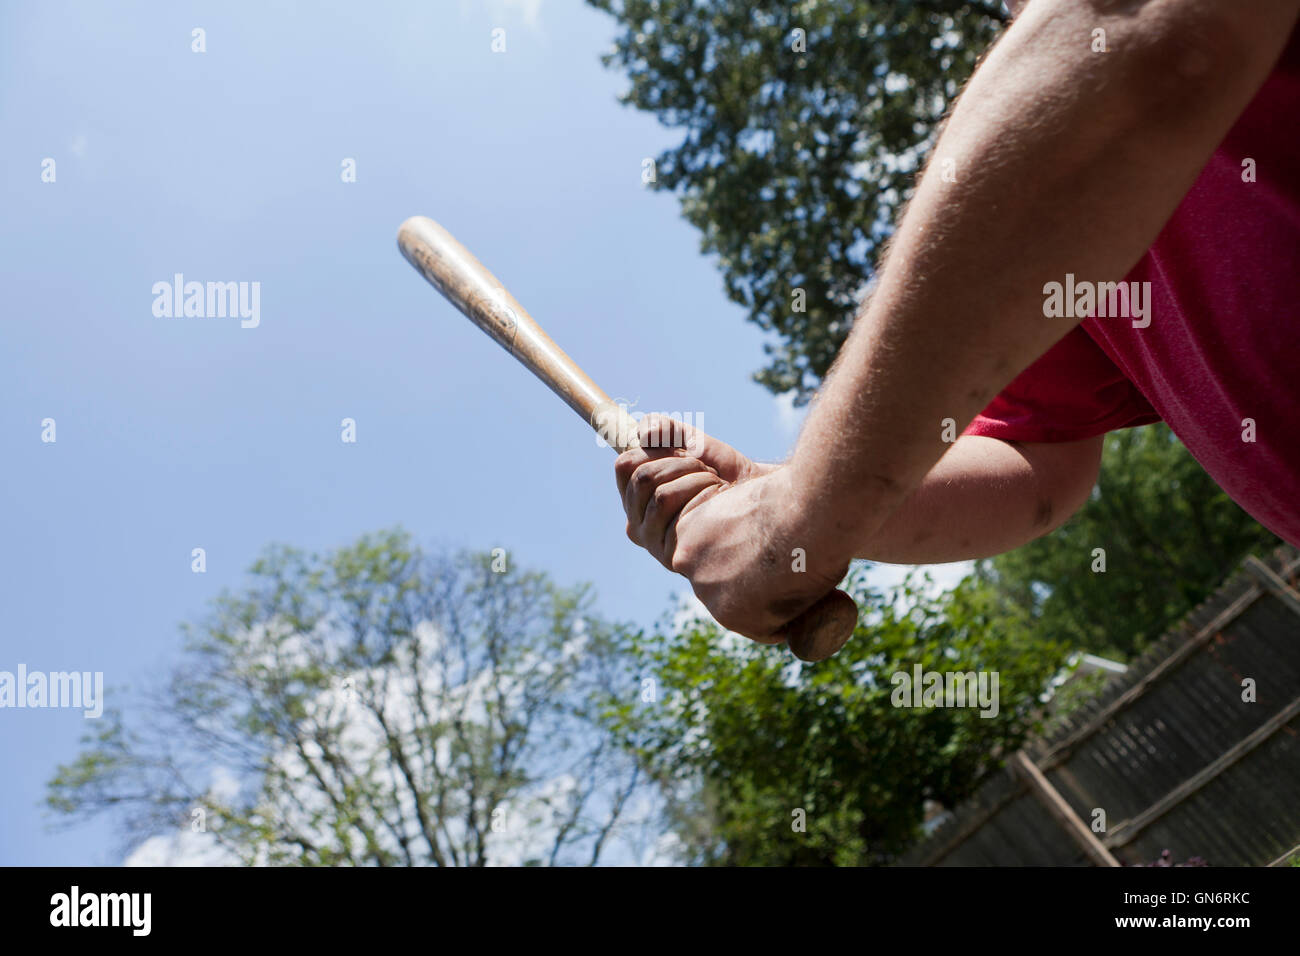 Man holding a wooden baseball bat preparing to swing in self